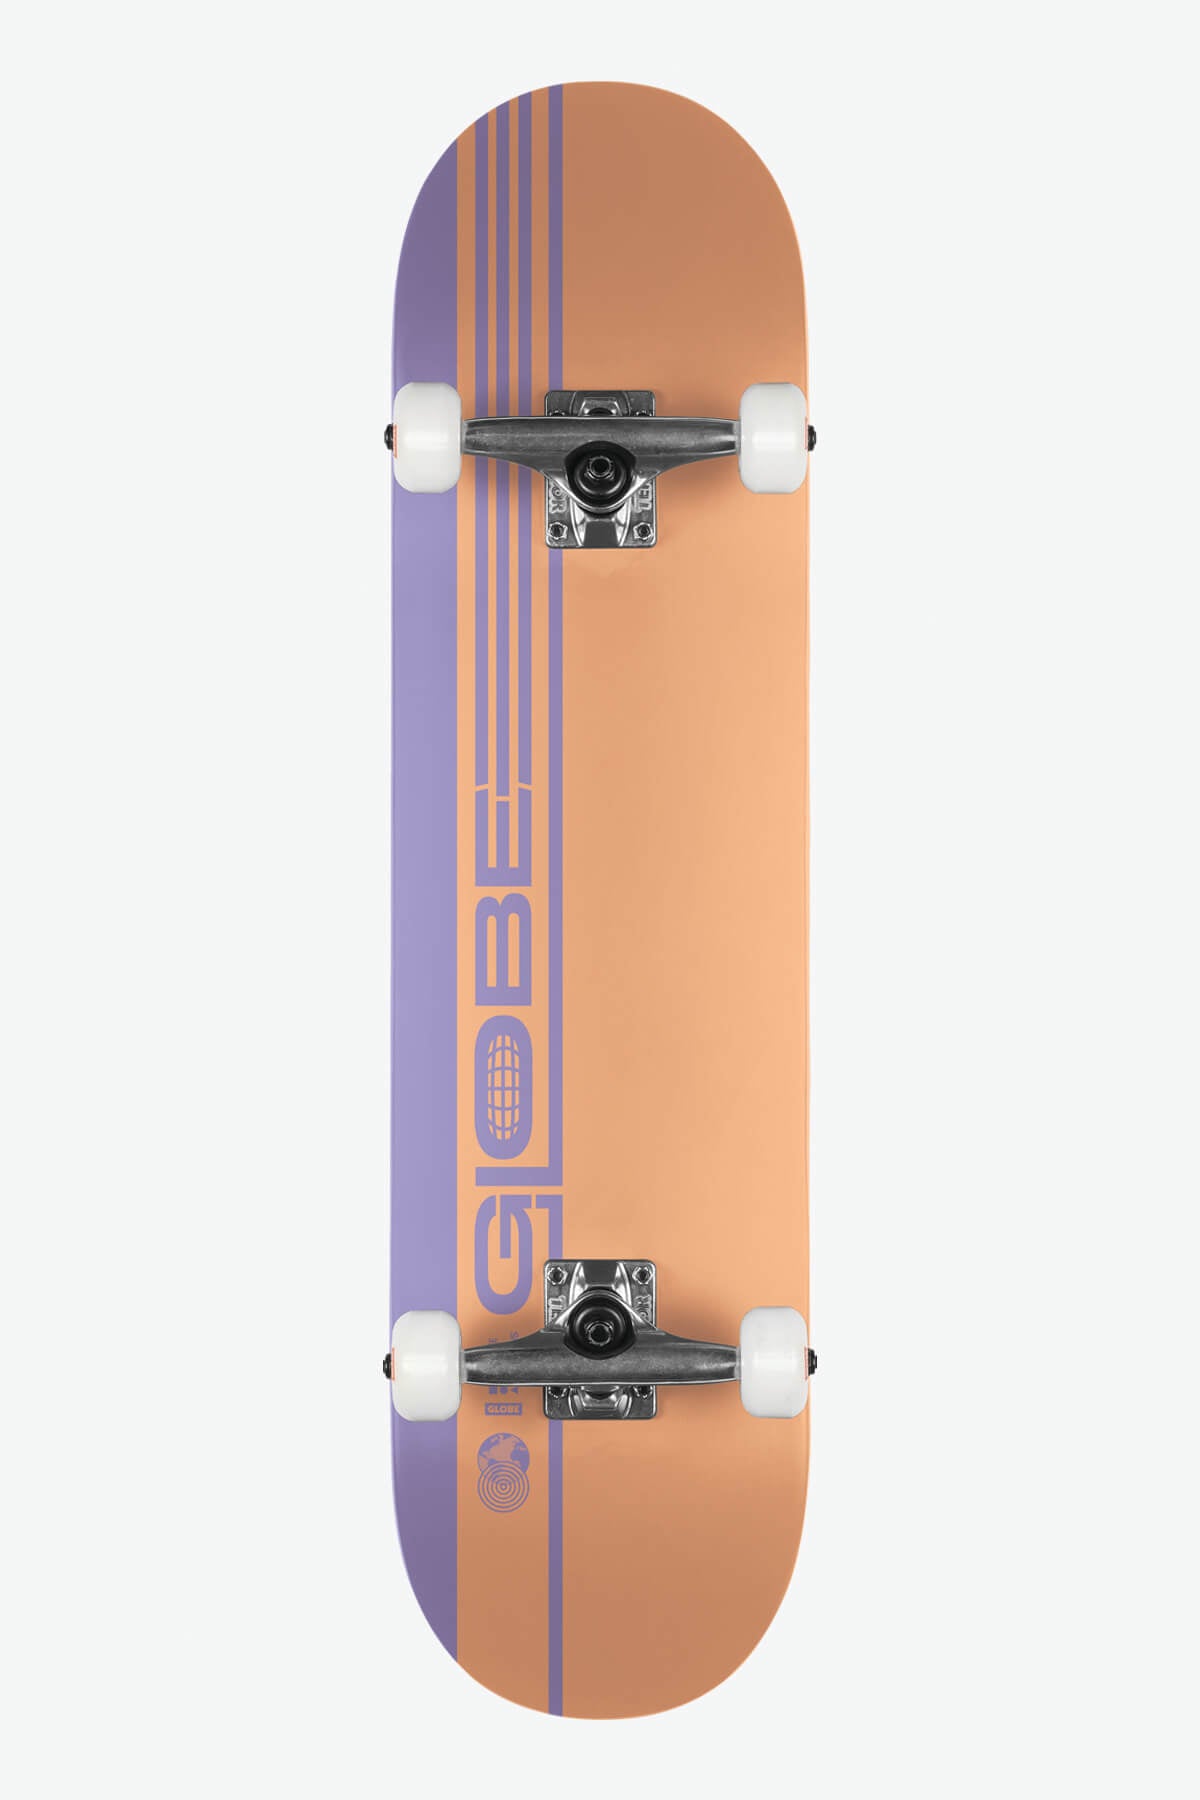 Globe - G0 Strype Hard - Dusty Orange/Lavender - 7.75" Complete Skateboard